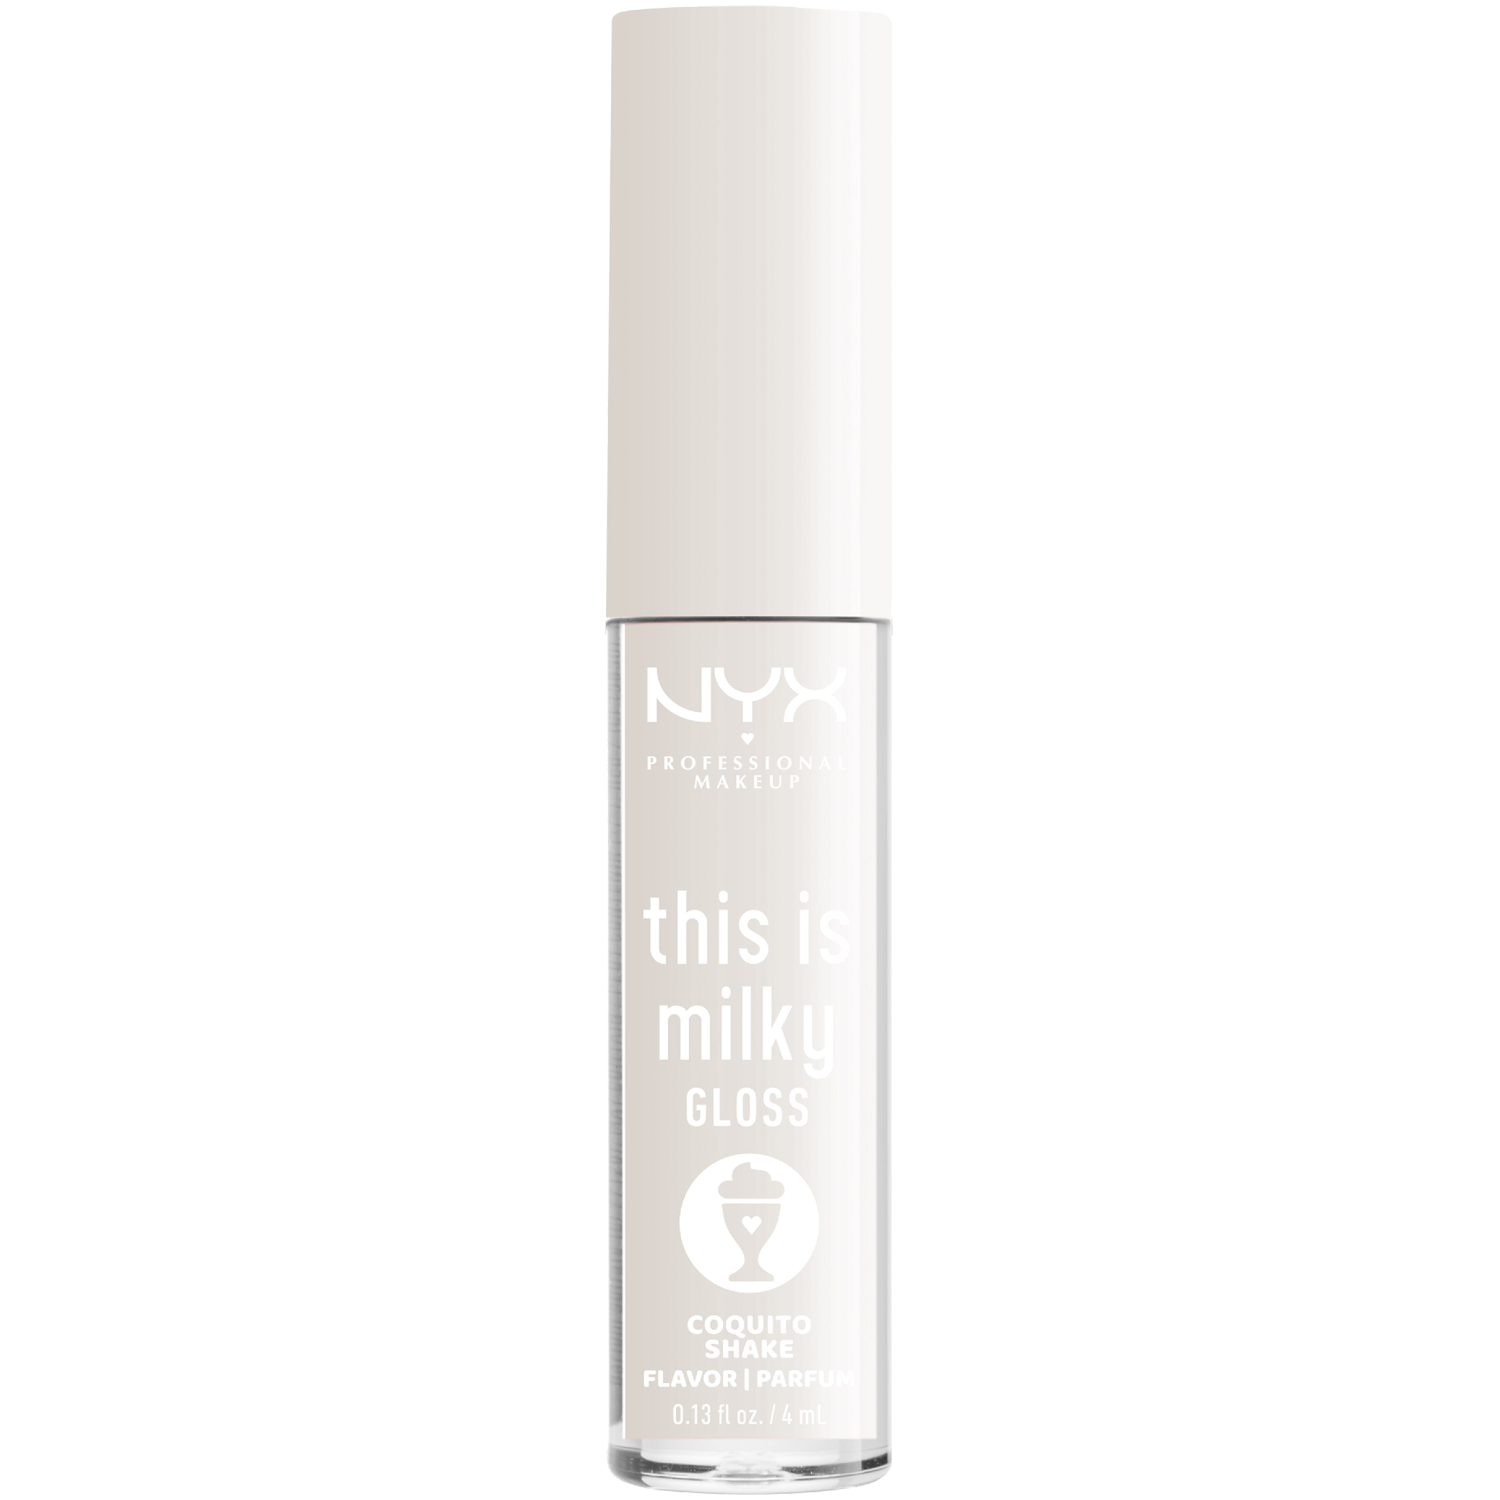 Блеск для губ coquito shake Nyx Professional Makeup This Is Milky Gloss, 4 мл увлажняющий блеск для губ придающий объем и сияние lumene luminous shine hydrating